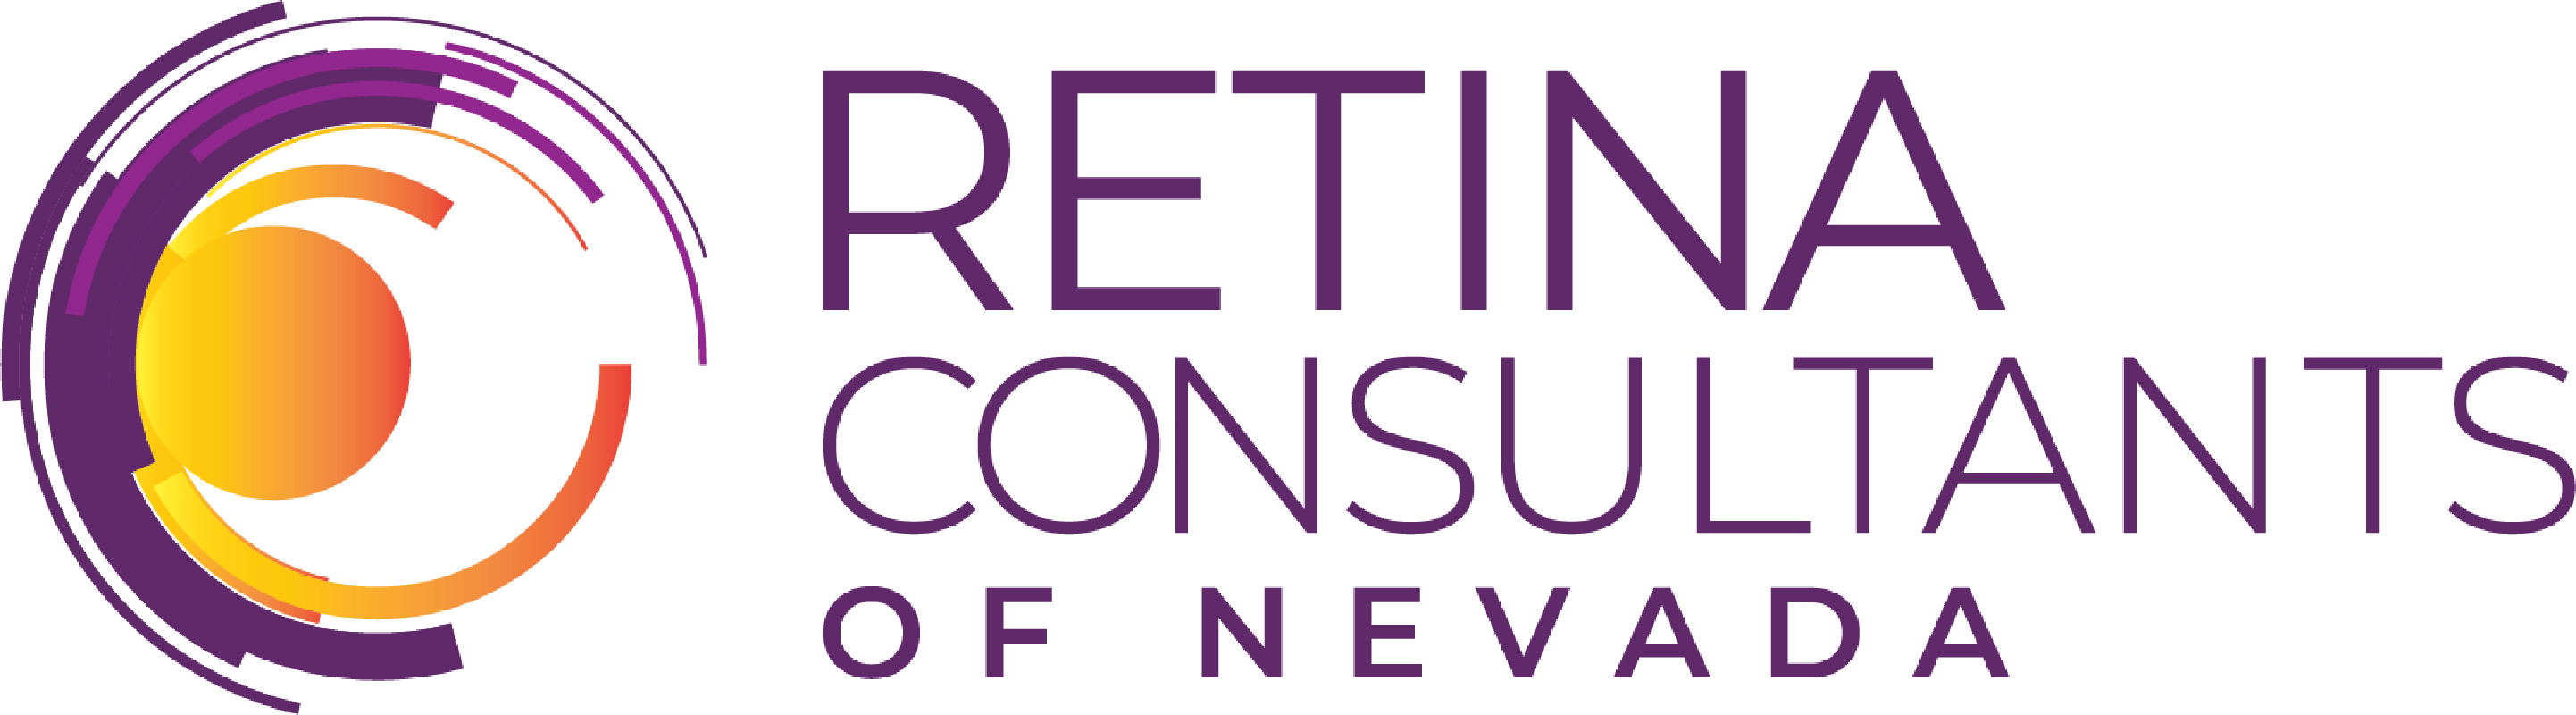 Retina Consultants of Nevada